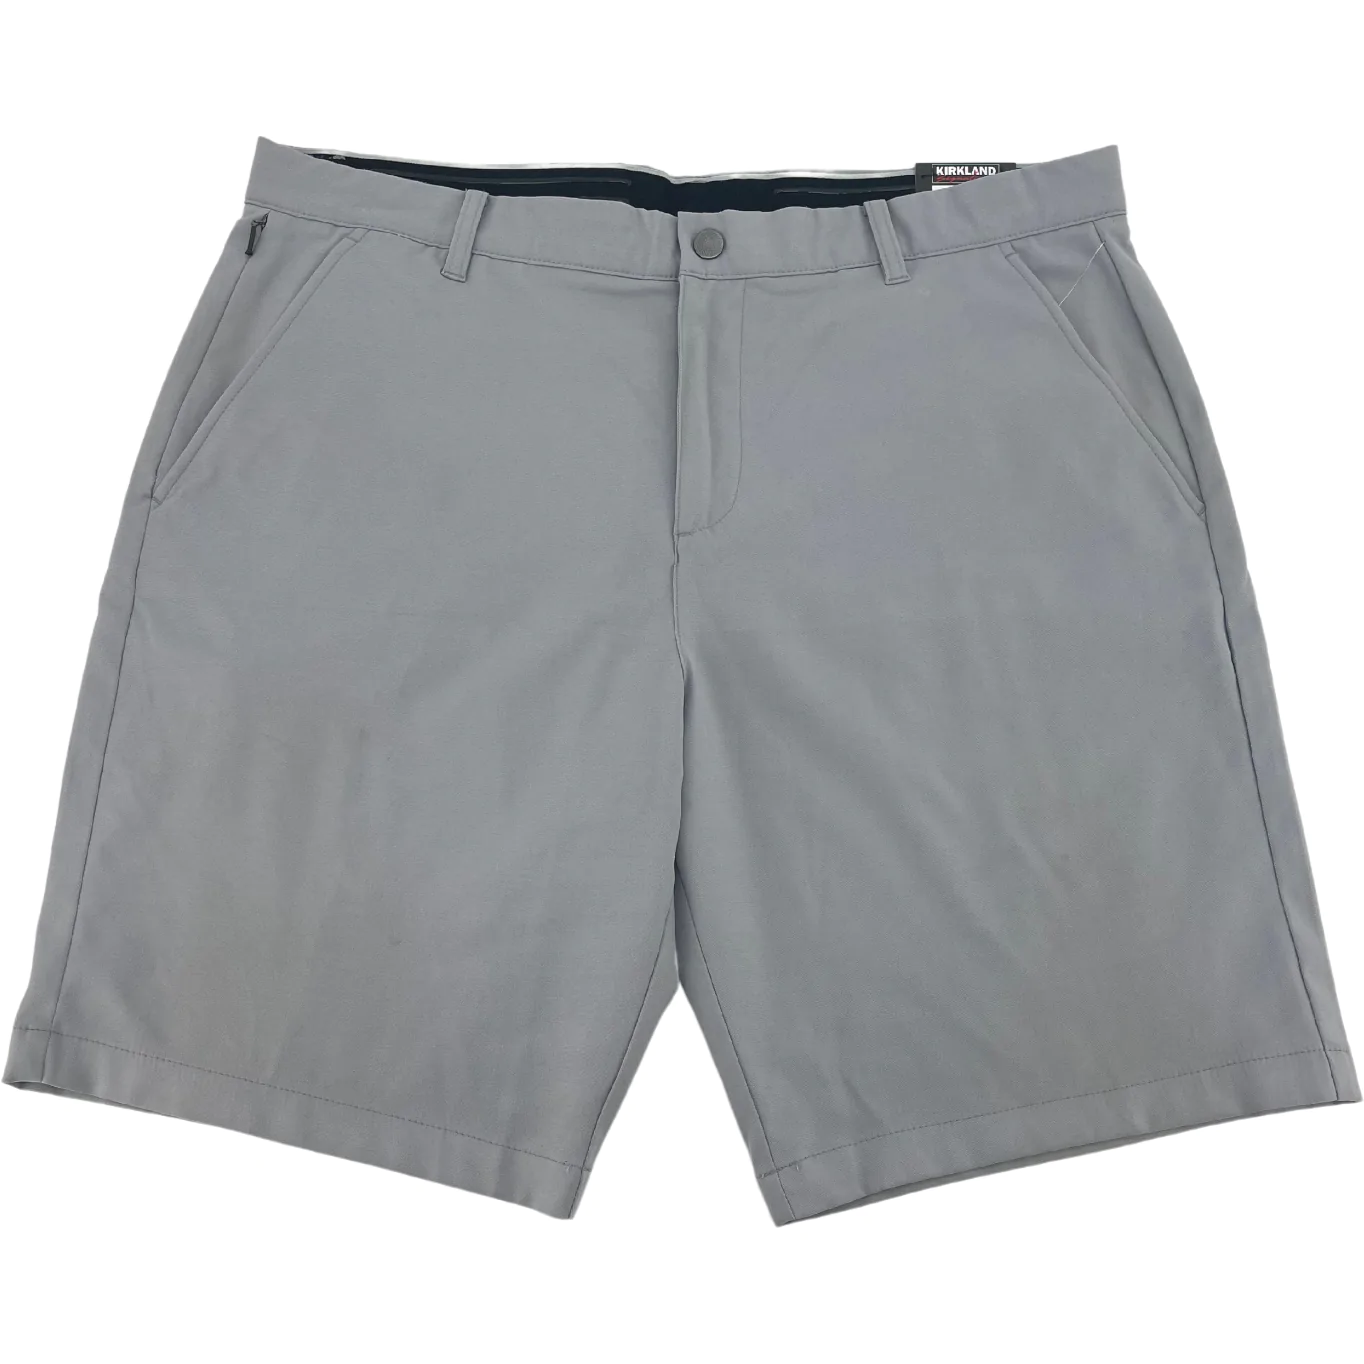 Kirkland Men's Shorts / Performance Shorts / Grey / Size 38